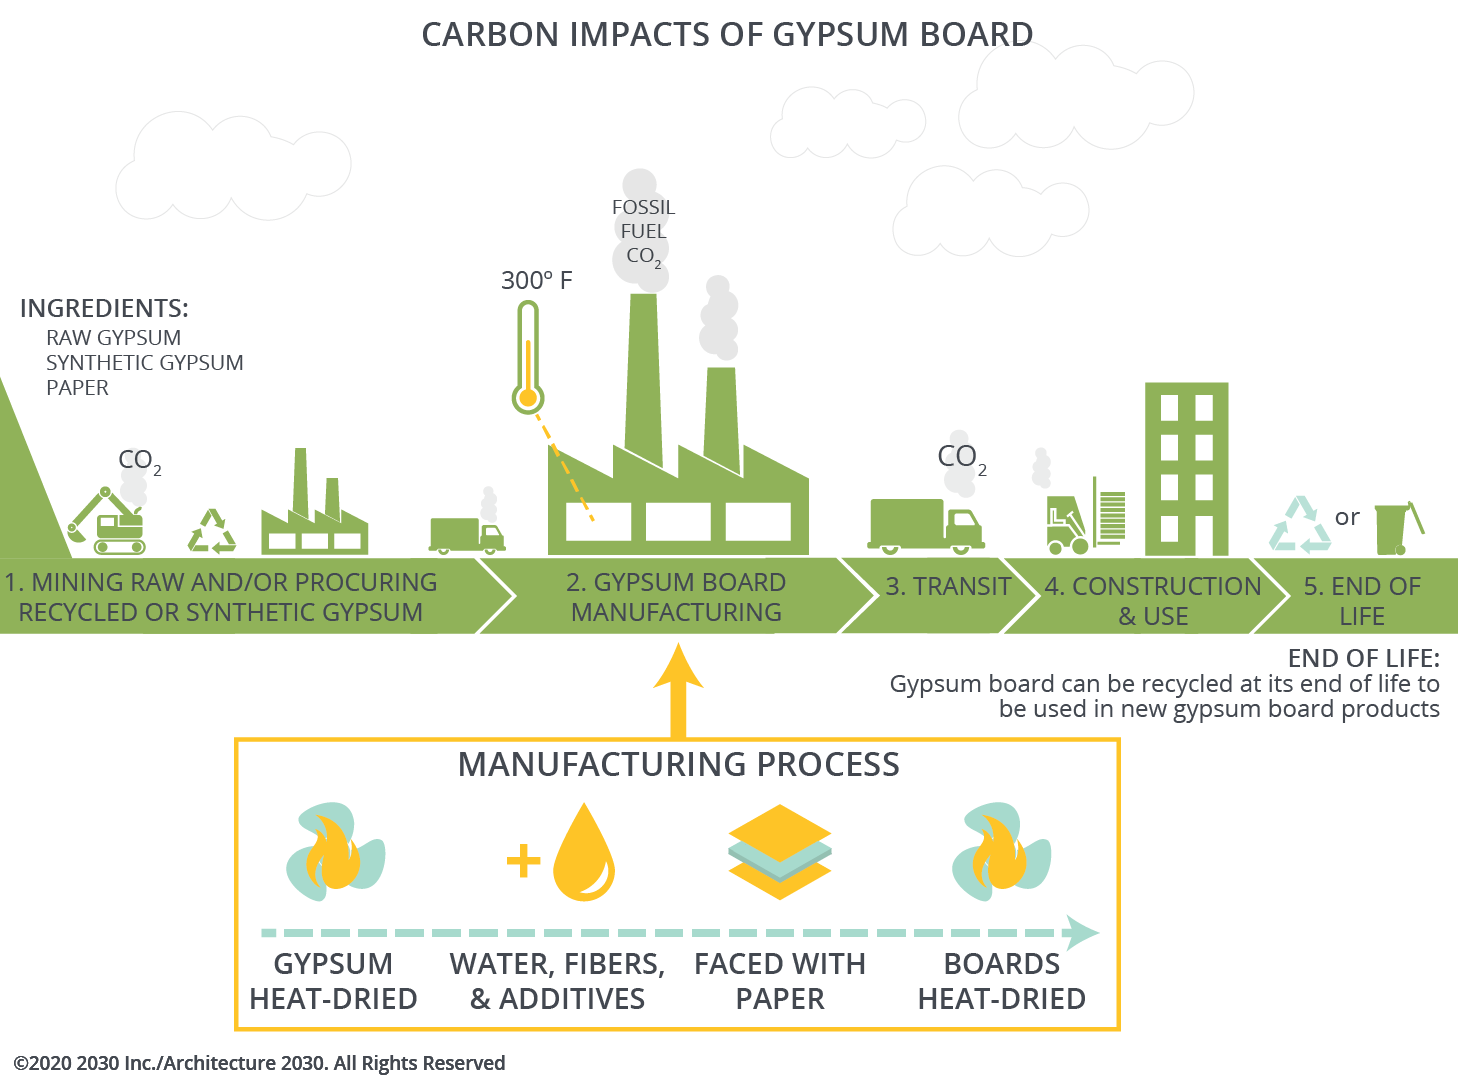 GYPSUM BOARD – Carbon Smart Materials Palette